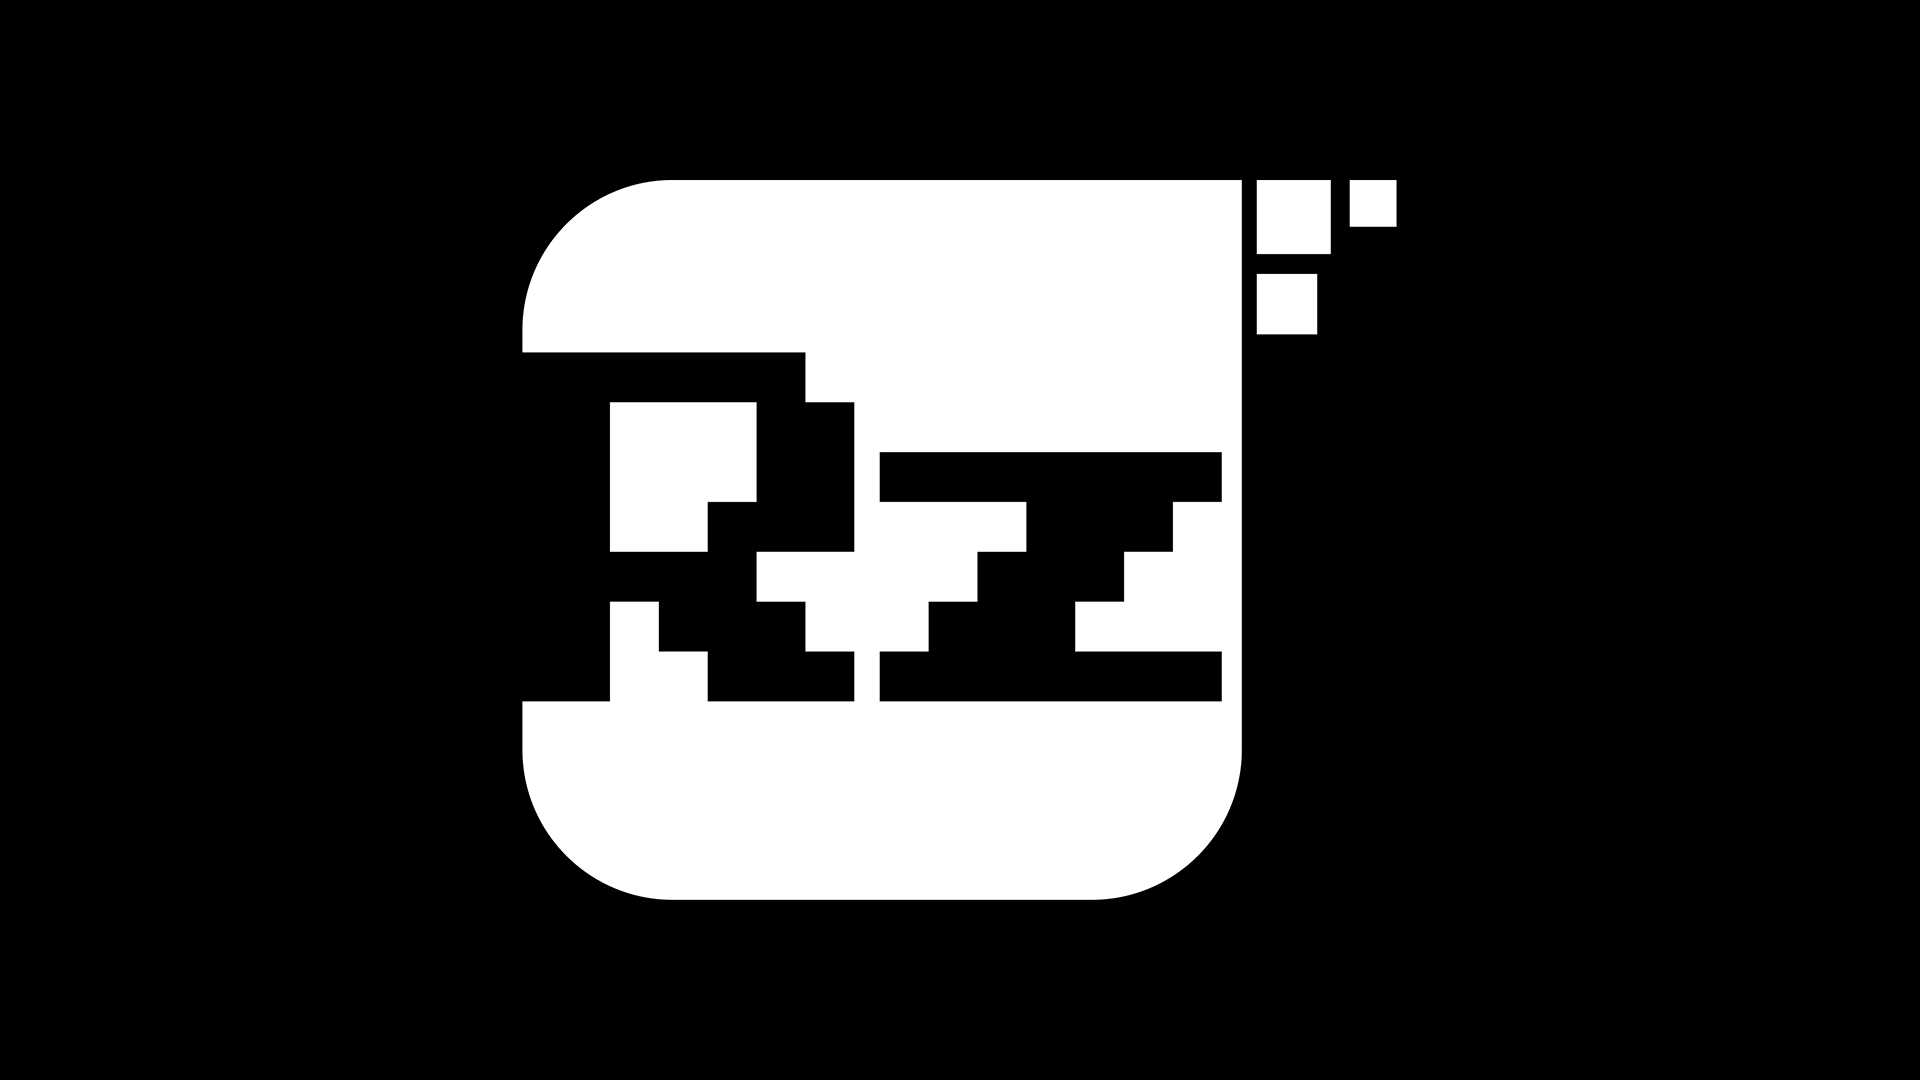 Rz logo